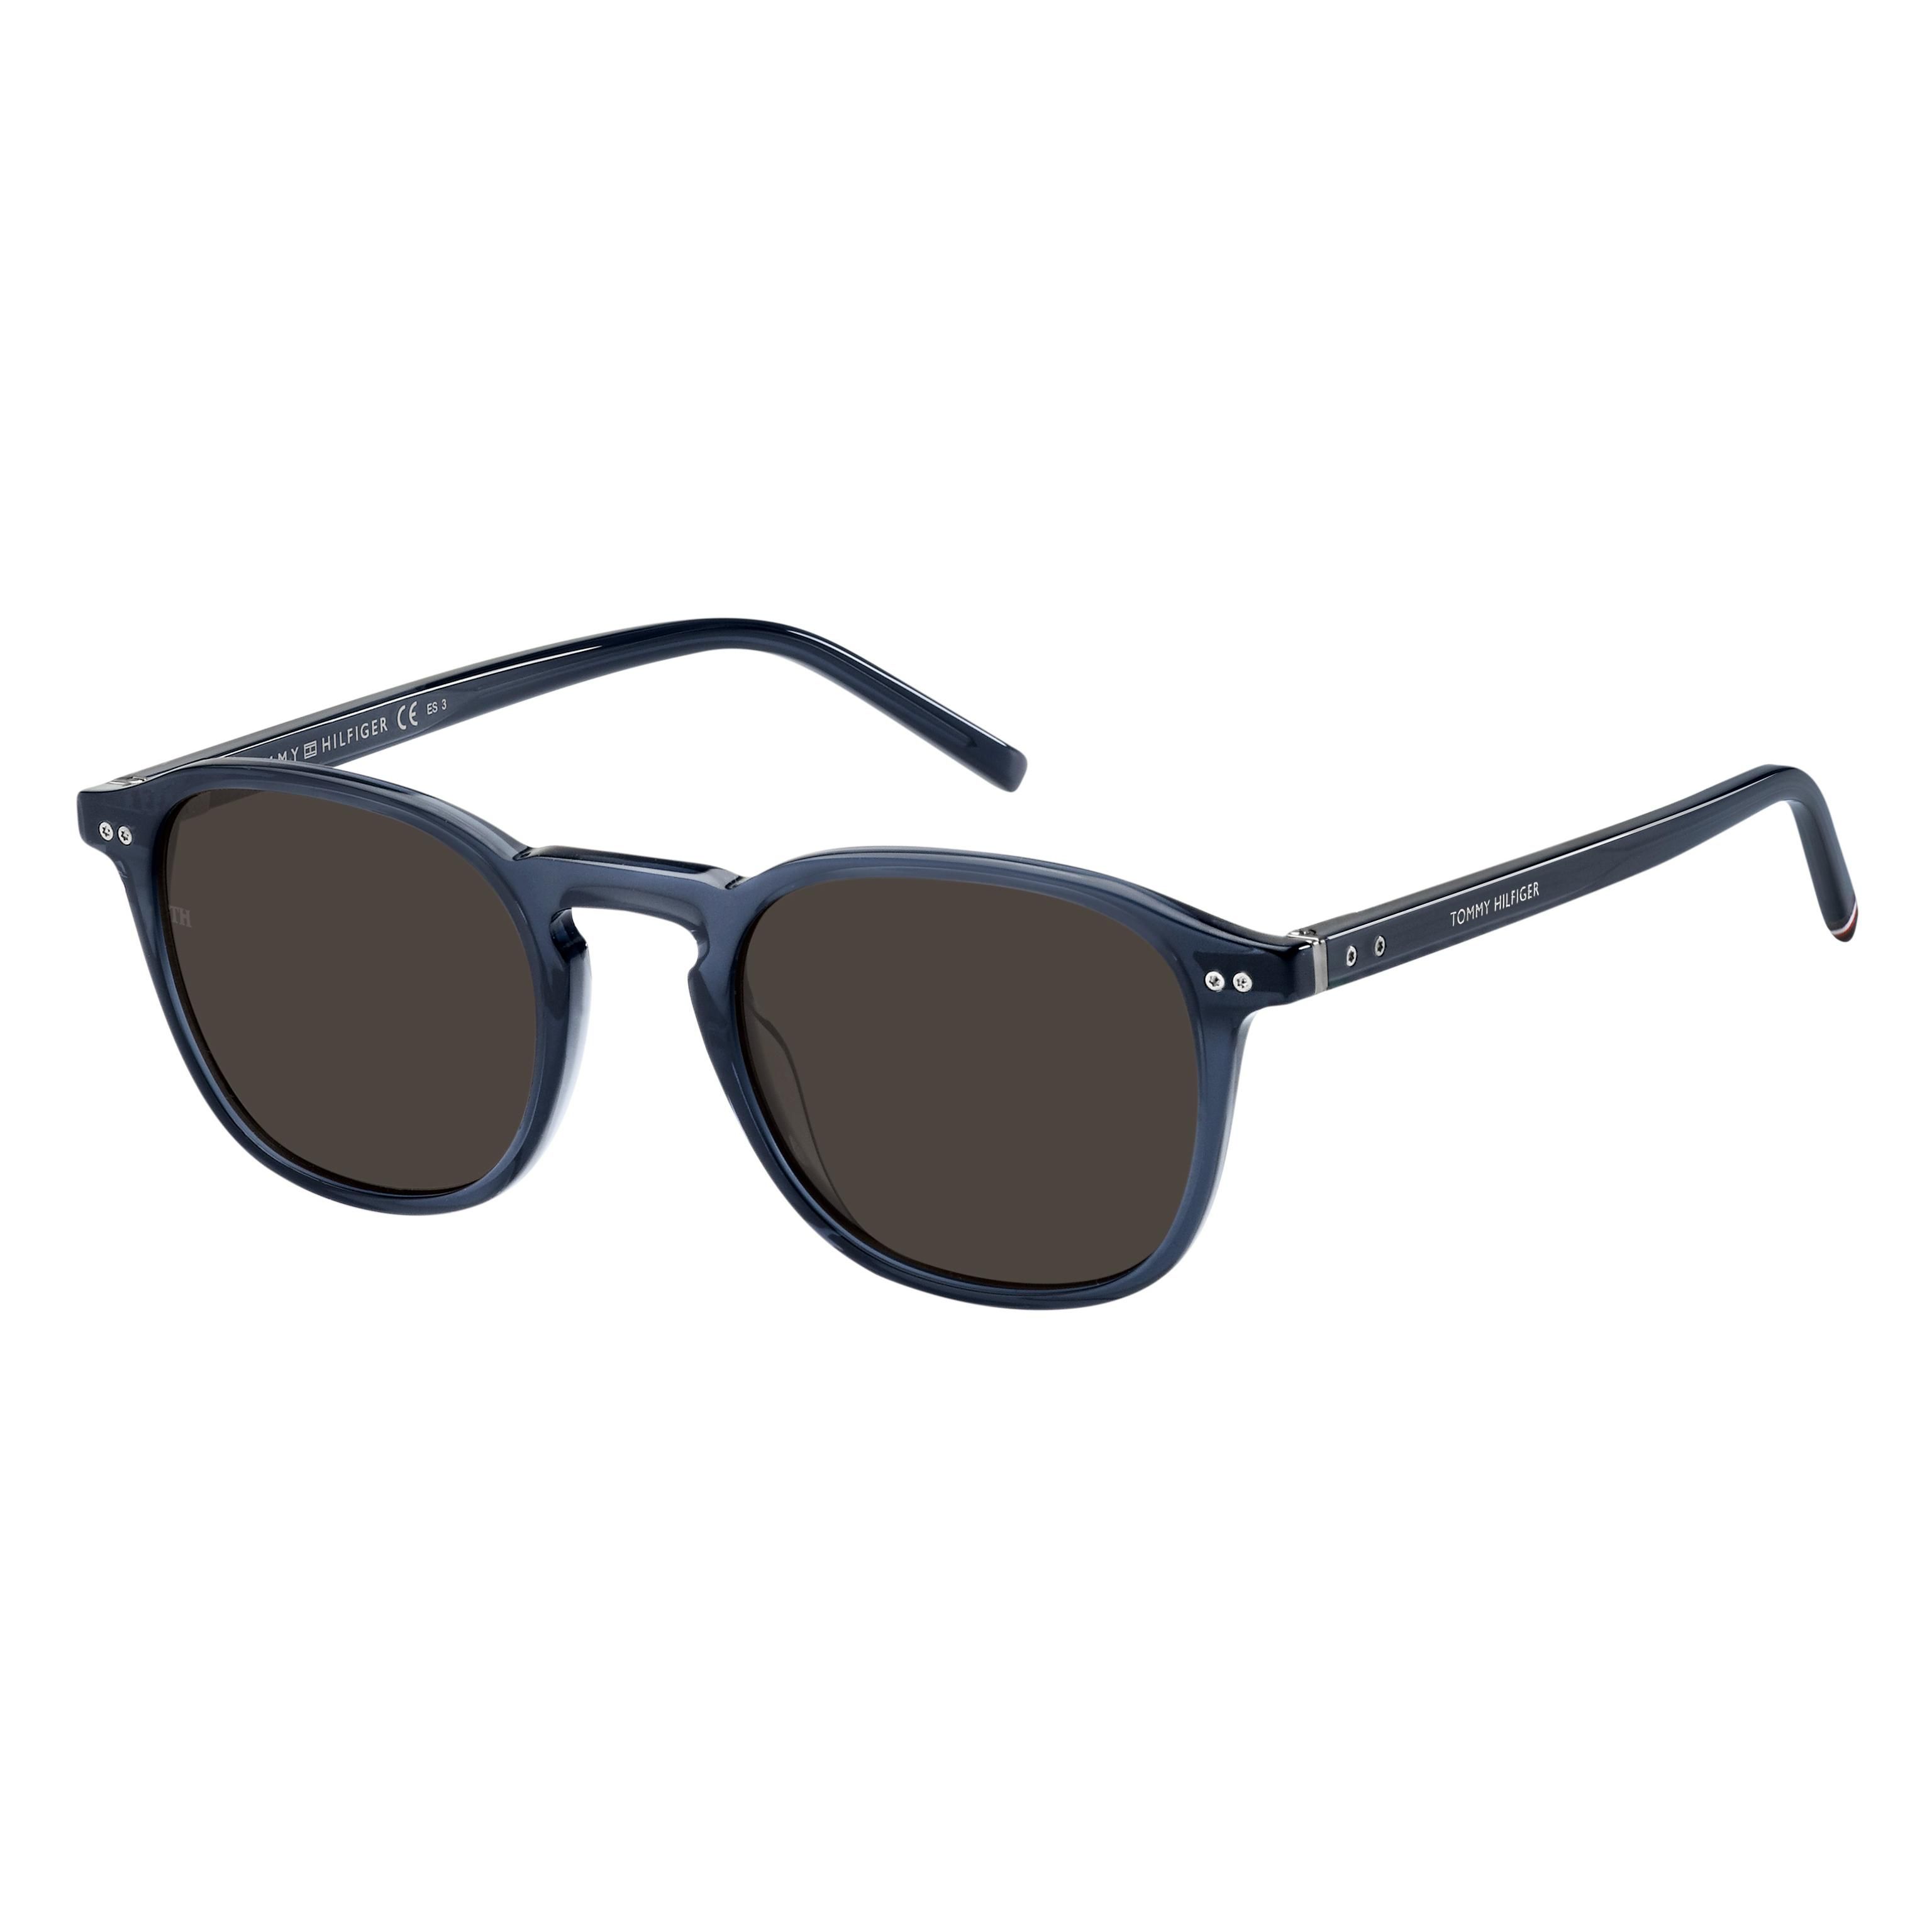 TH 1939 S Panthos Sunglasses PJP - size 51